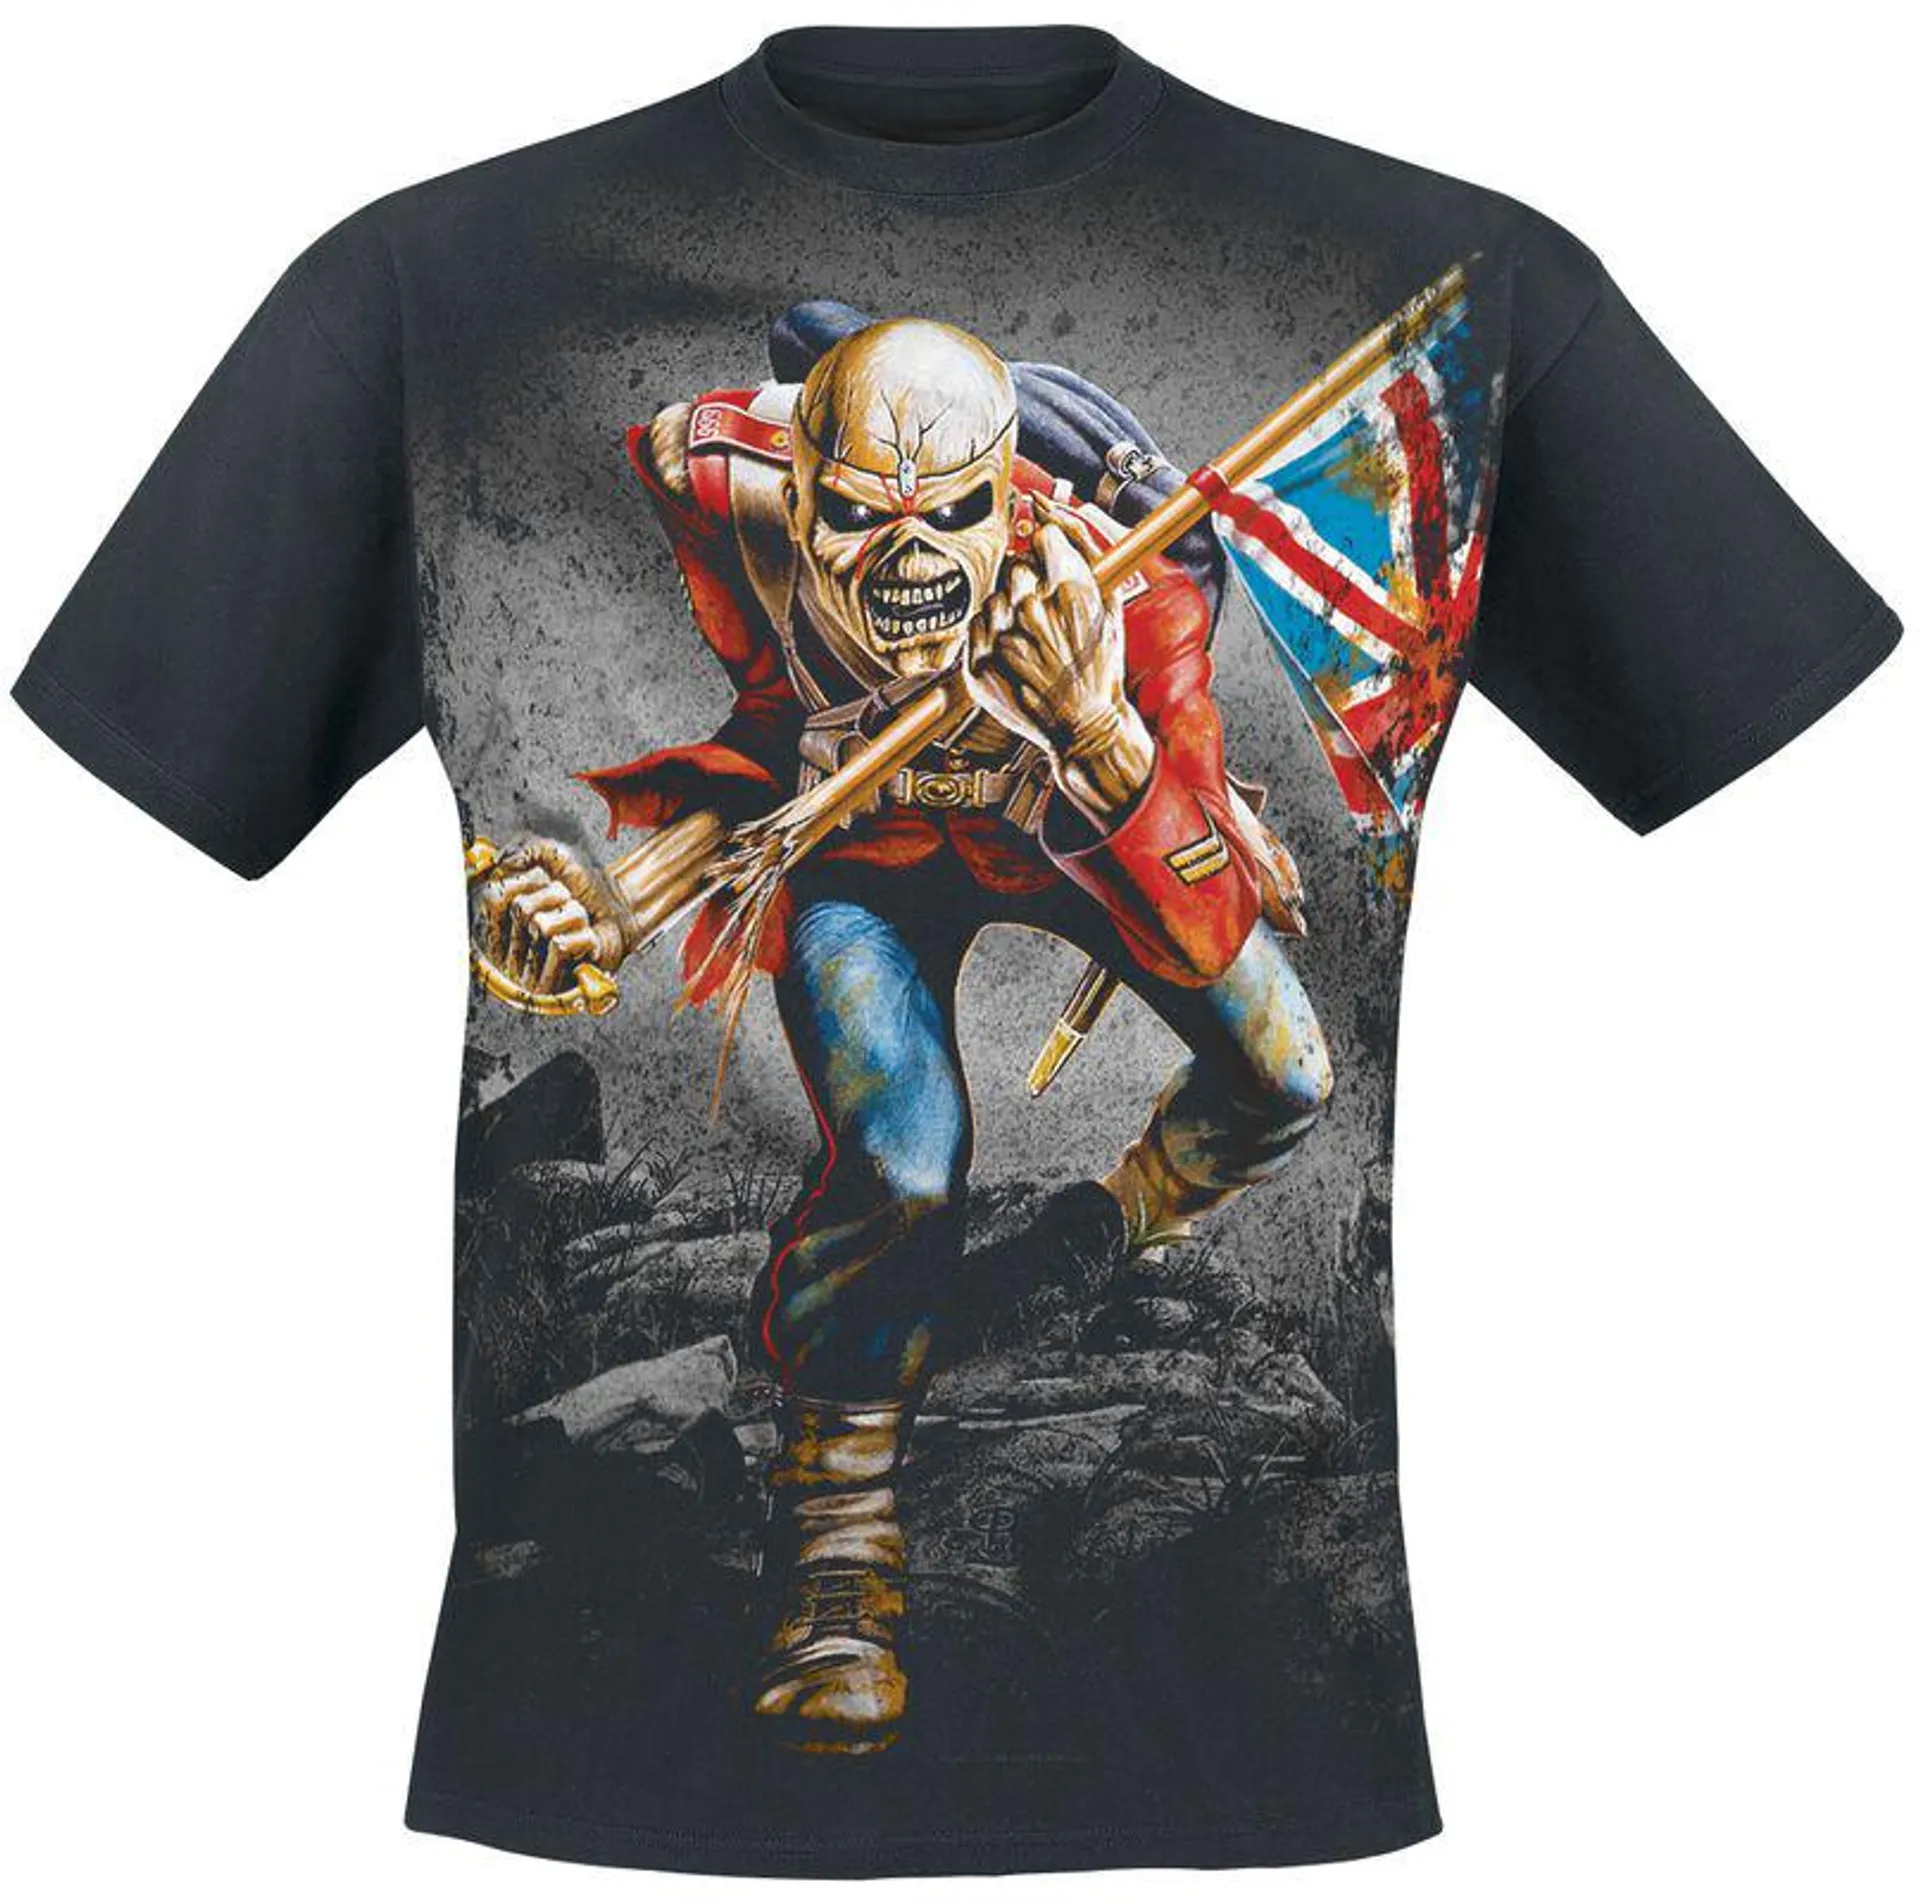 "TheTrooper" Camiseta Negro de Iron Maiden